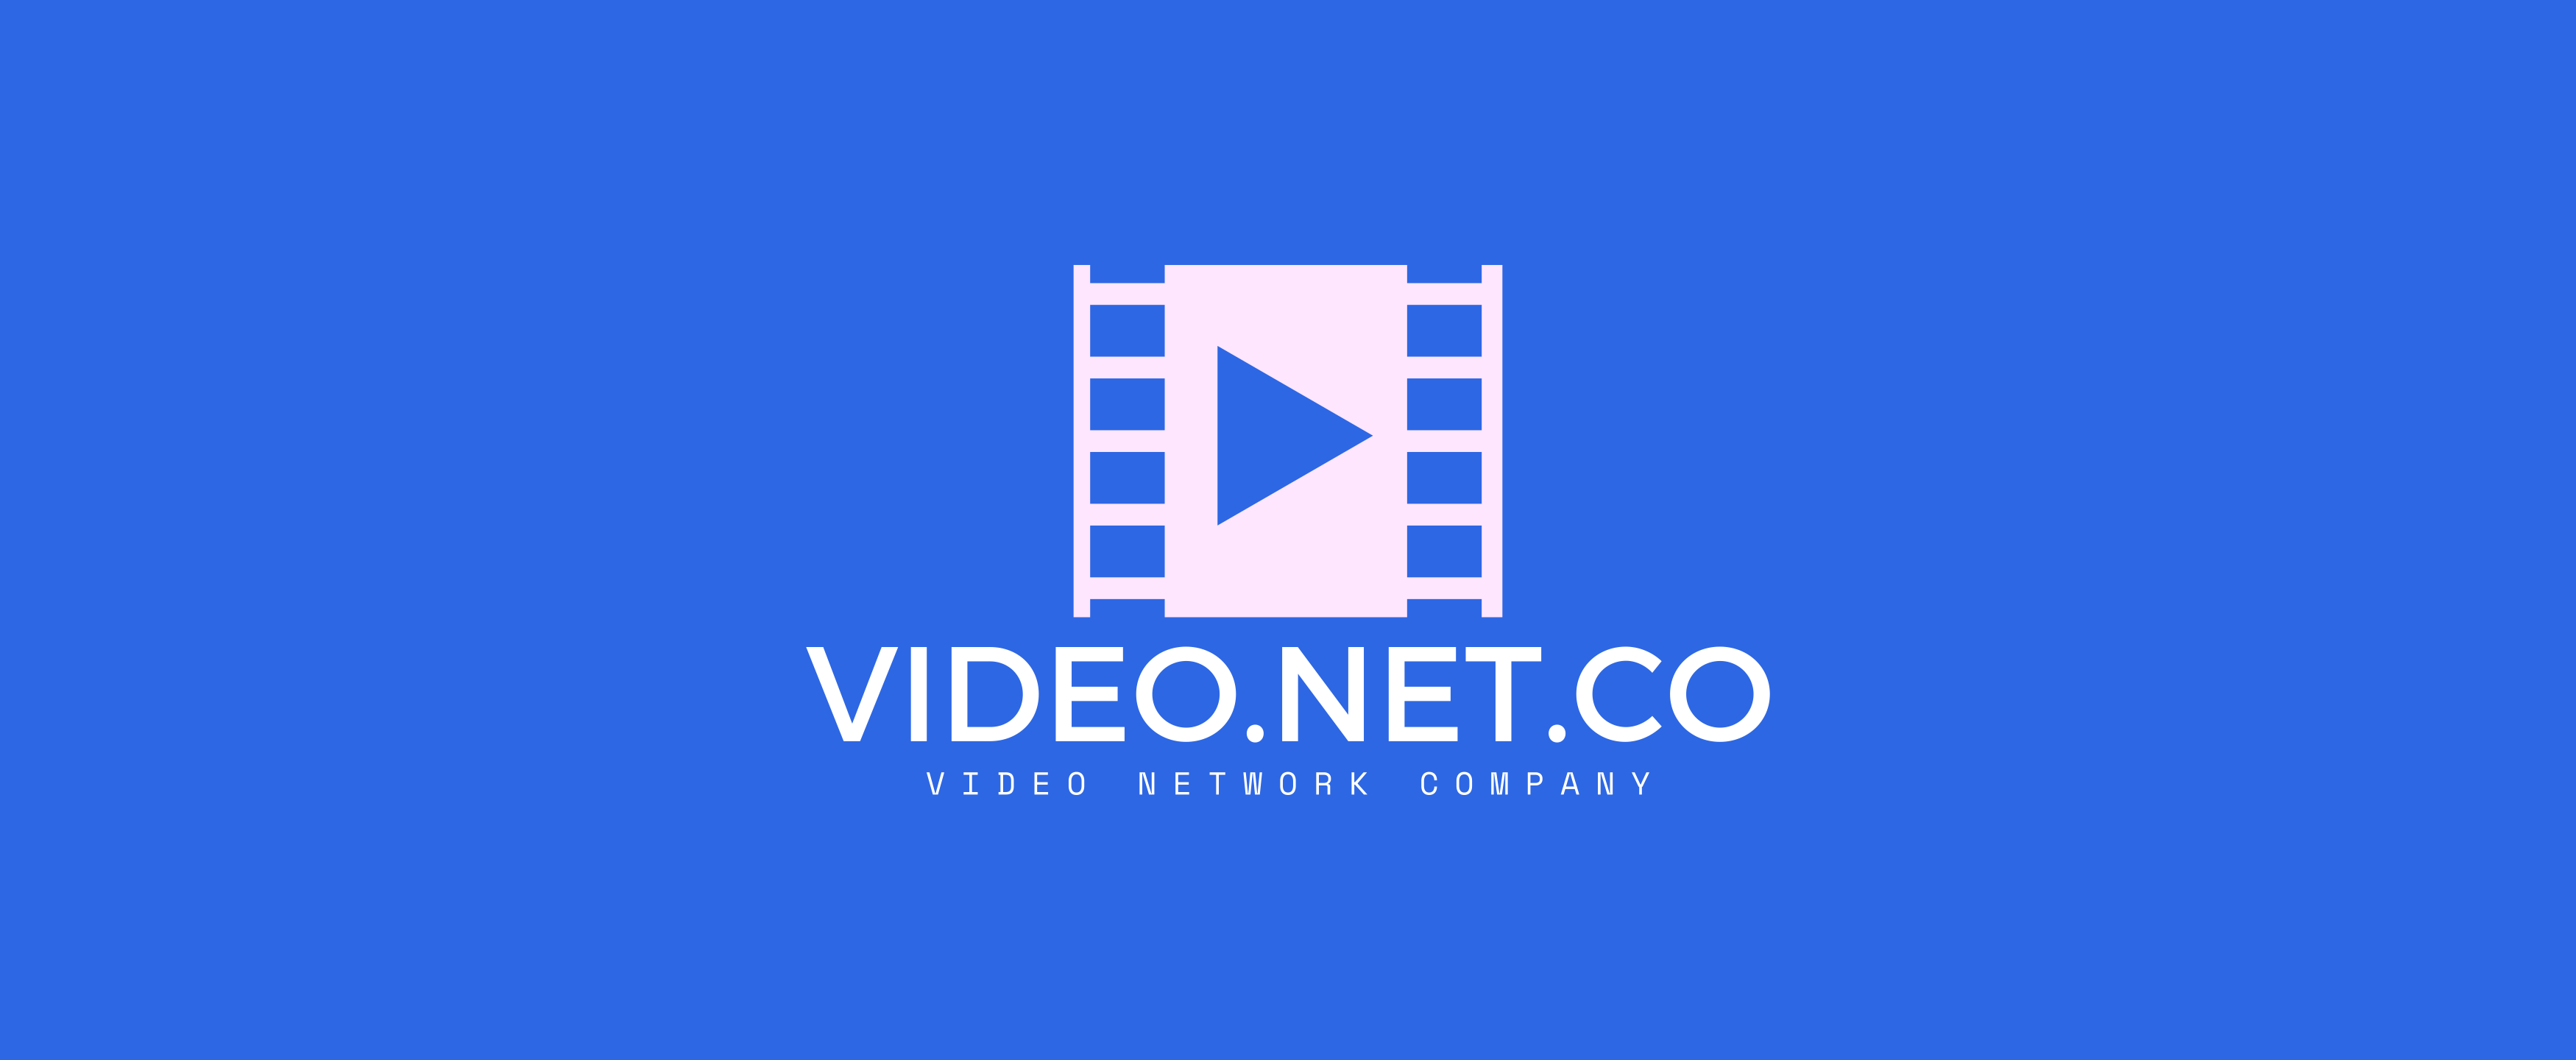 VIDEO NETWORK COMPANY